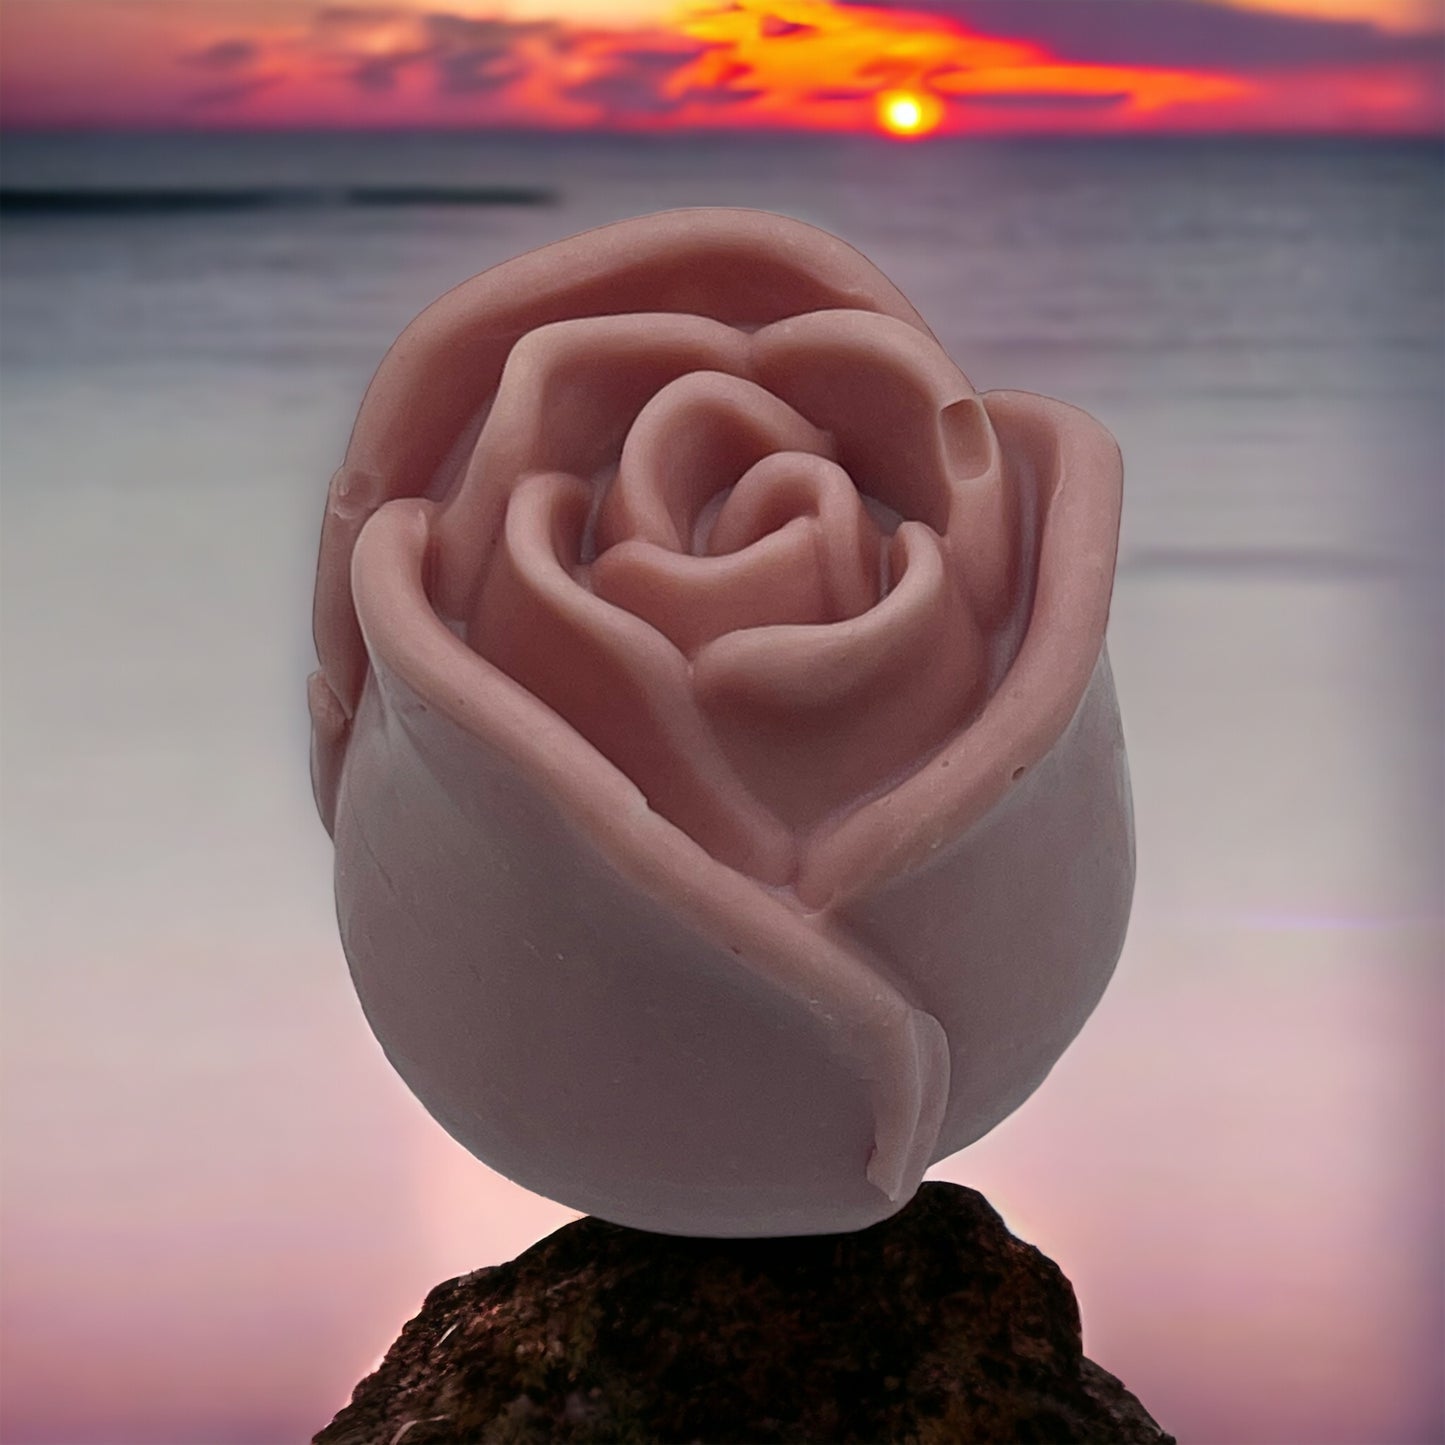 Rose Jasmine Soap: a sweet, fruity and honeyed sensory experience